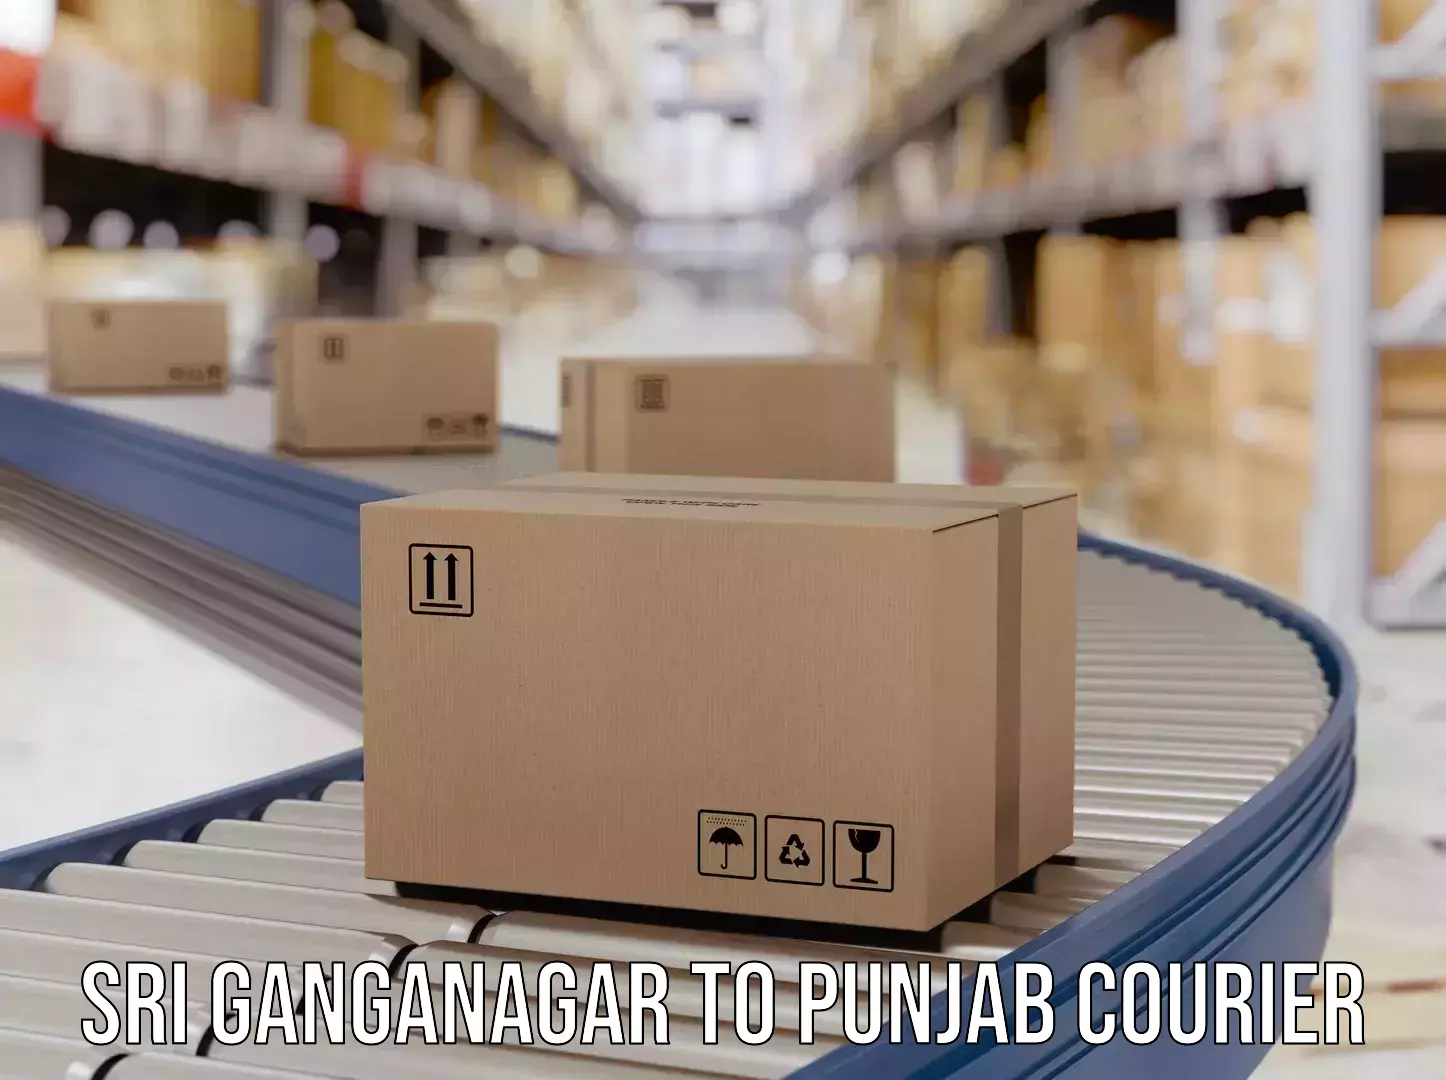 International courier networks Sri Ganganagar to Anandpur Sahib